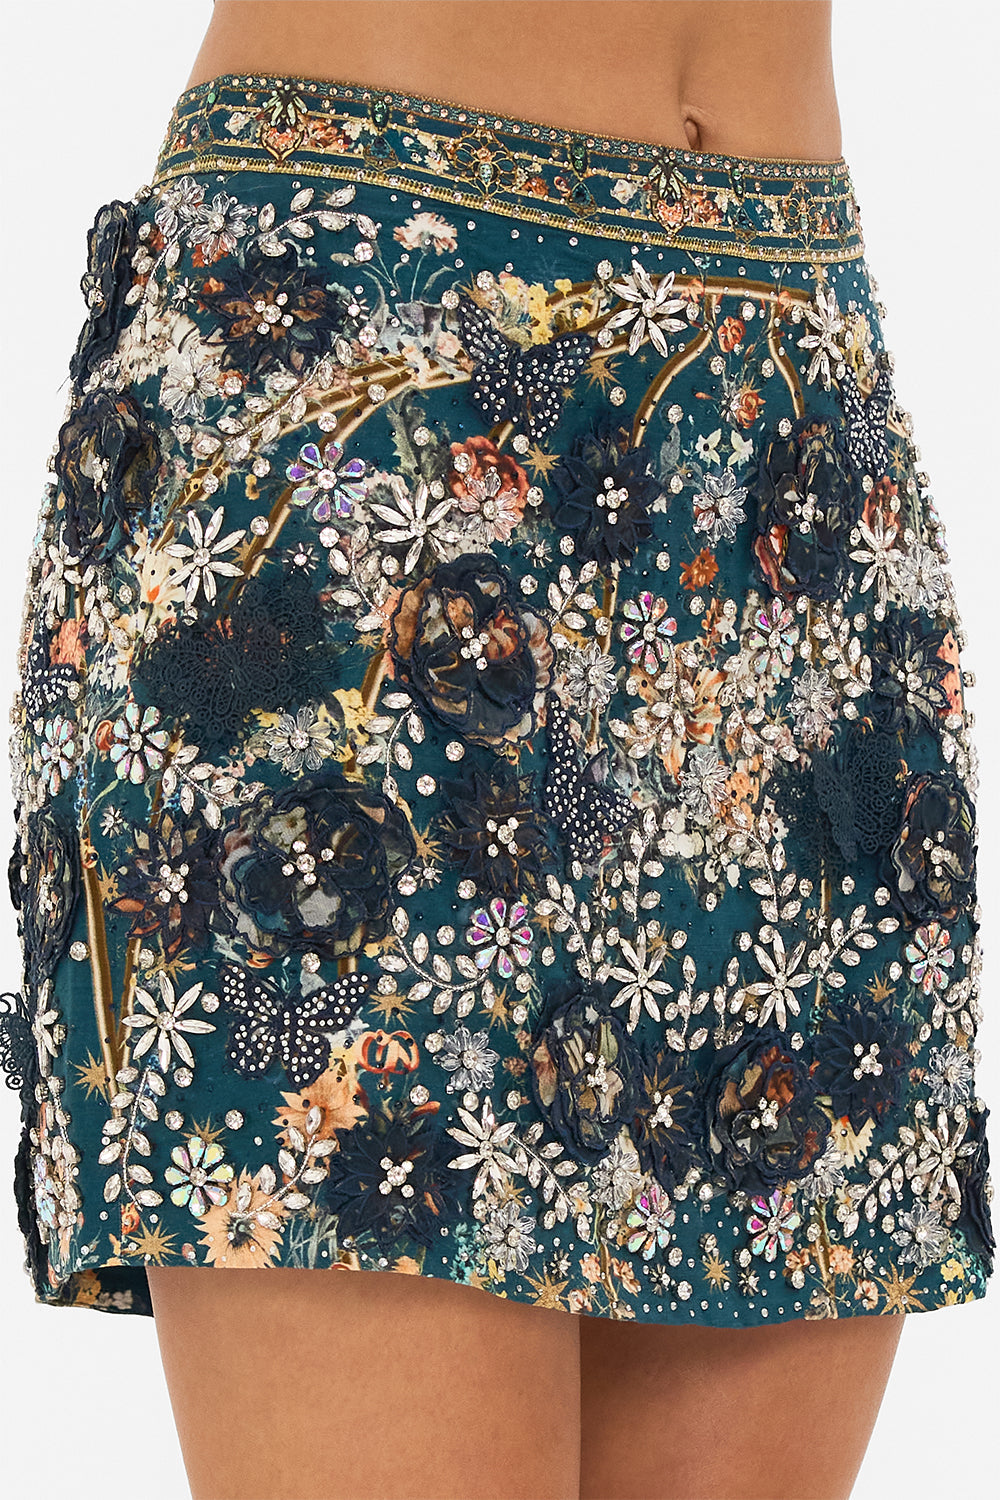 CAMILLA mini skirt in She Who Wears The Crown print